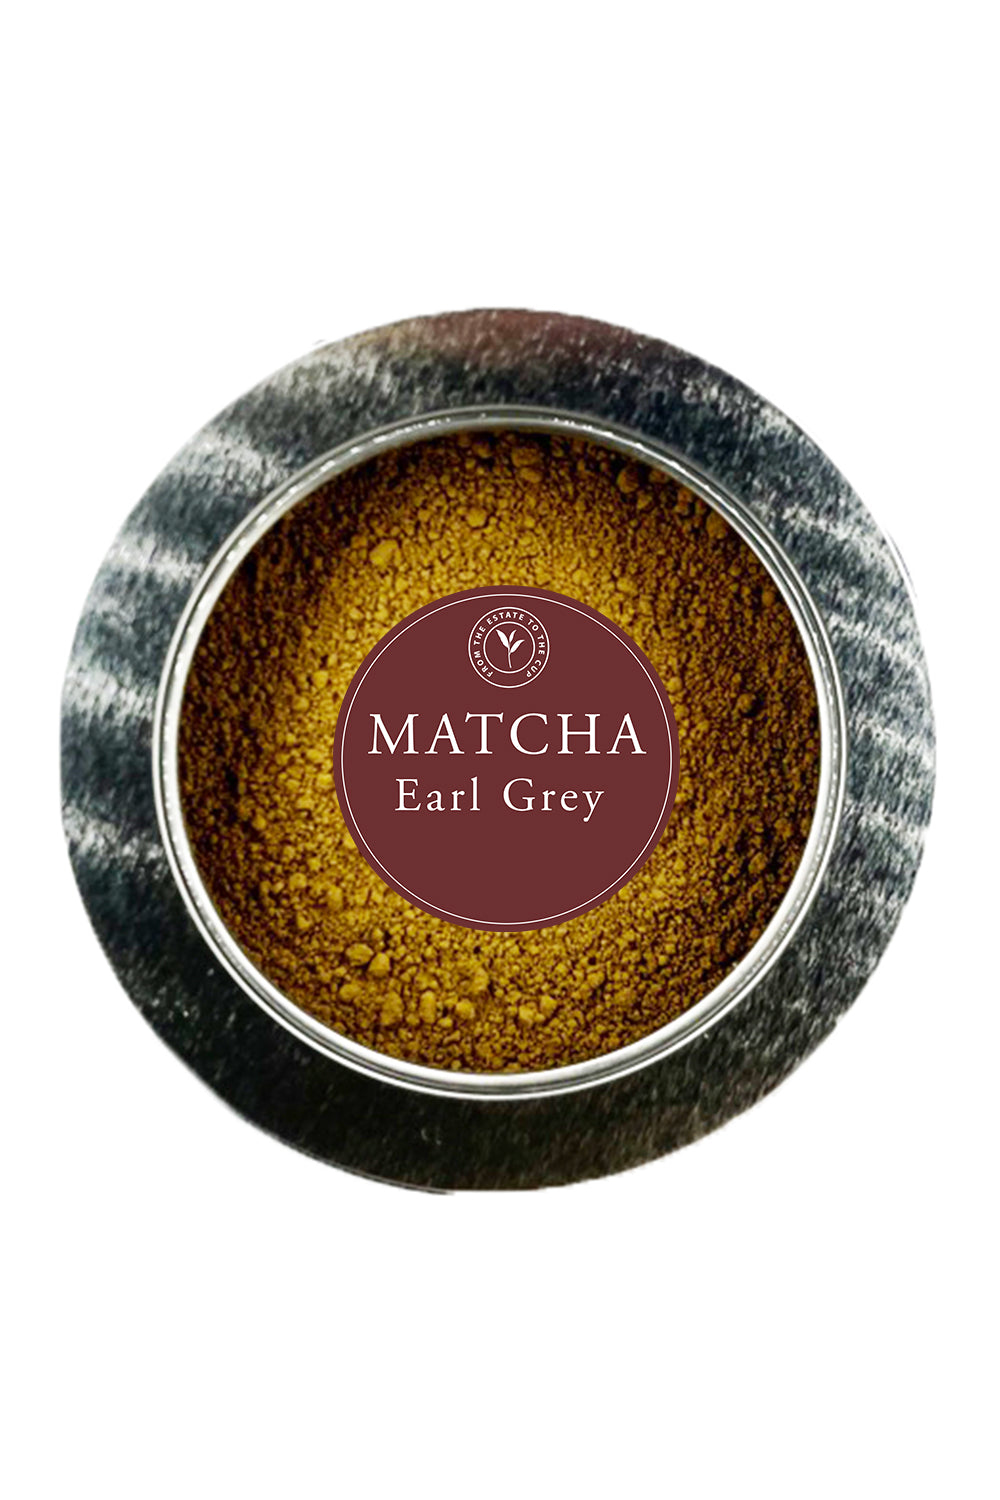 Earl Grey Matcha-40g tin-Loose Leaf Tea-High Teas